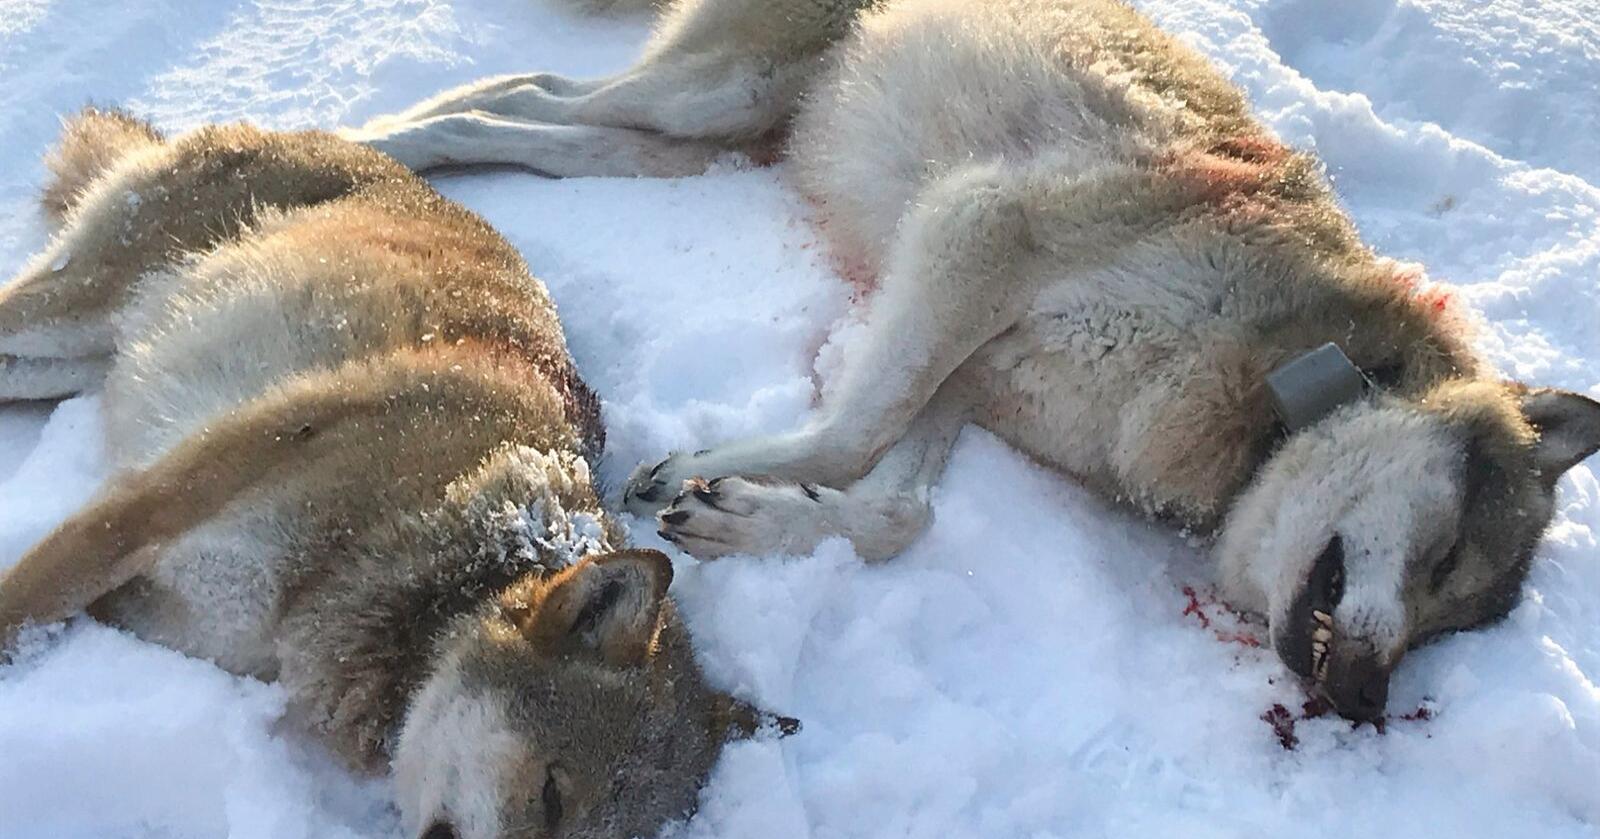 Den omstridte ulvejakten på Slettås-flokken i Trysil startet første nyttårsdag med at to ulver ble skutt få timer etter at jakten startet klokken 10. Foto: Ole Martin Norderhaug / NTB scanpix